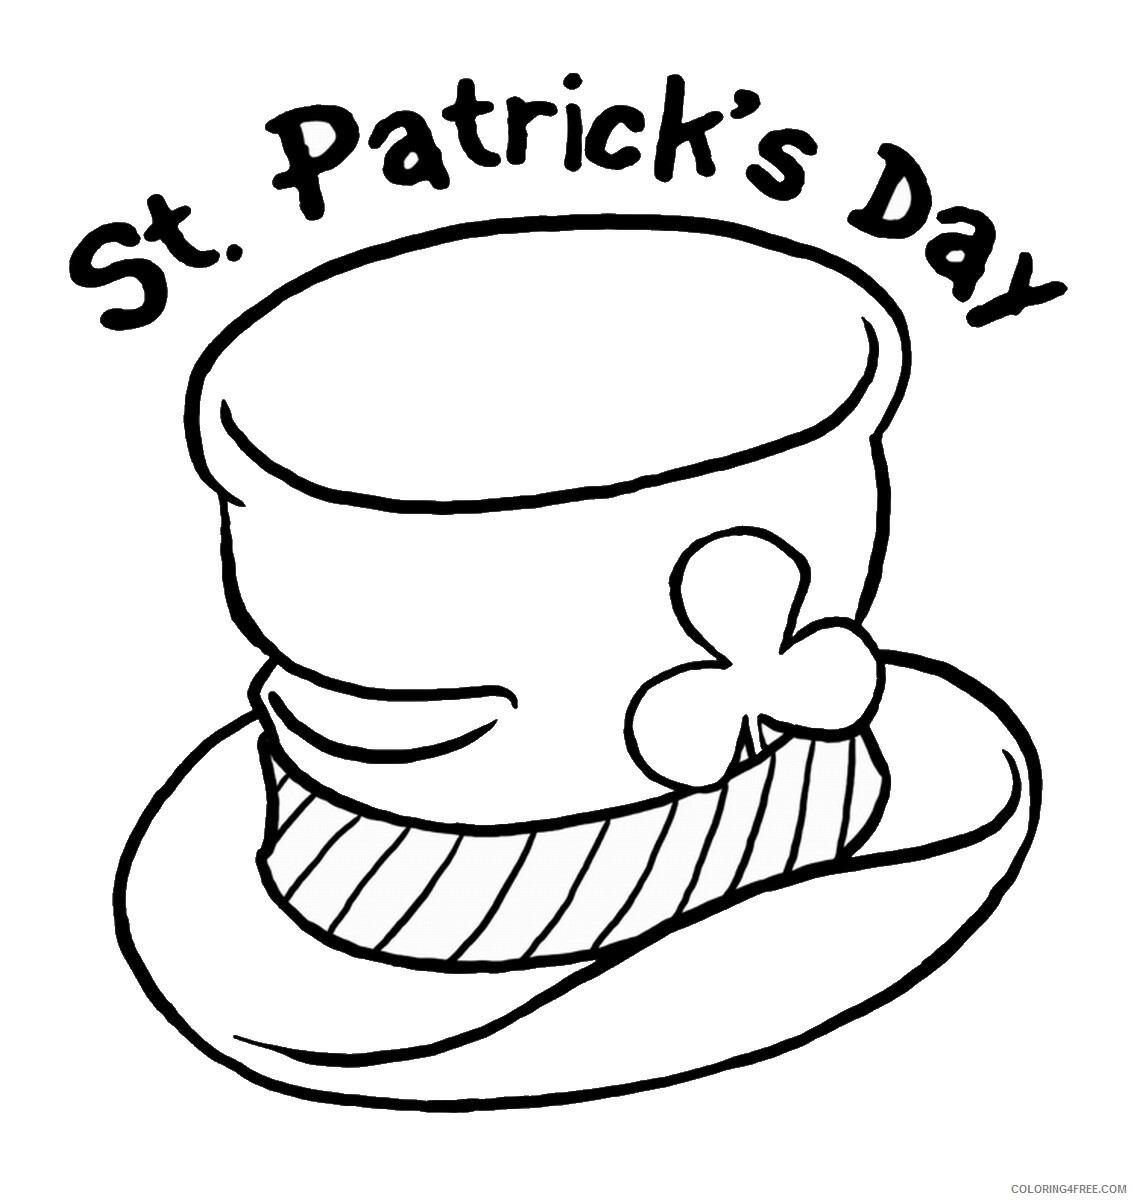 St Patricks Day Coloring Pages Holiday St Patricks Day Shamrock Printable 2021 0898 Coloring4free